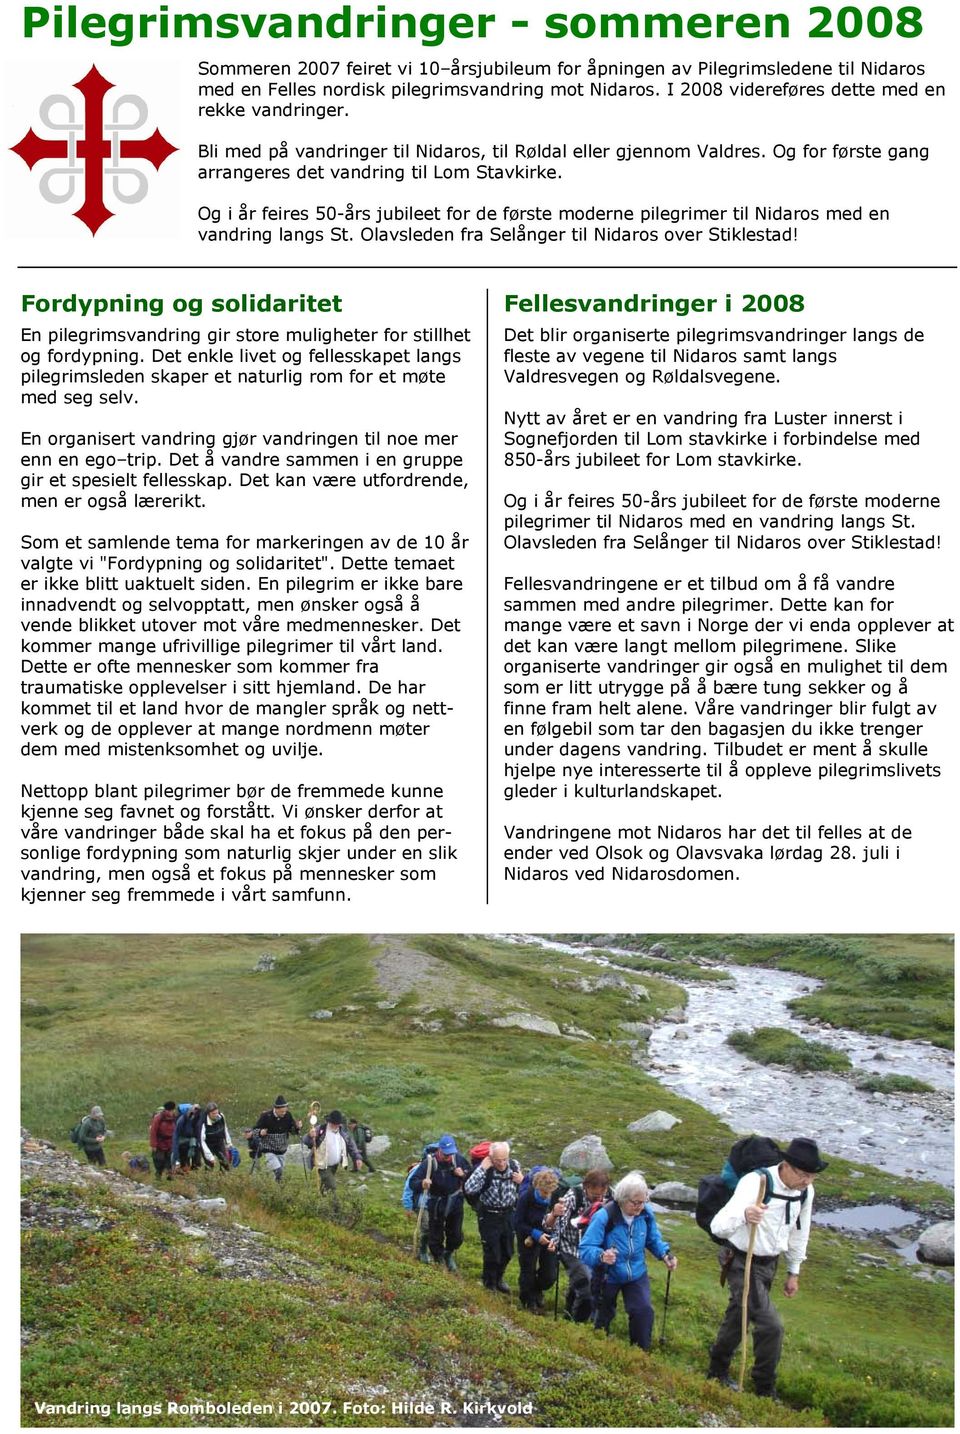 Og i år feires 50-års jubileet for de første moderne pilegrimer til Nidaros med en vandring langs St. Olavsleden fra Selånger til Nidaros over Stiklestad!